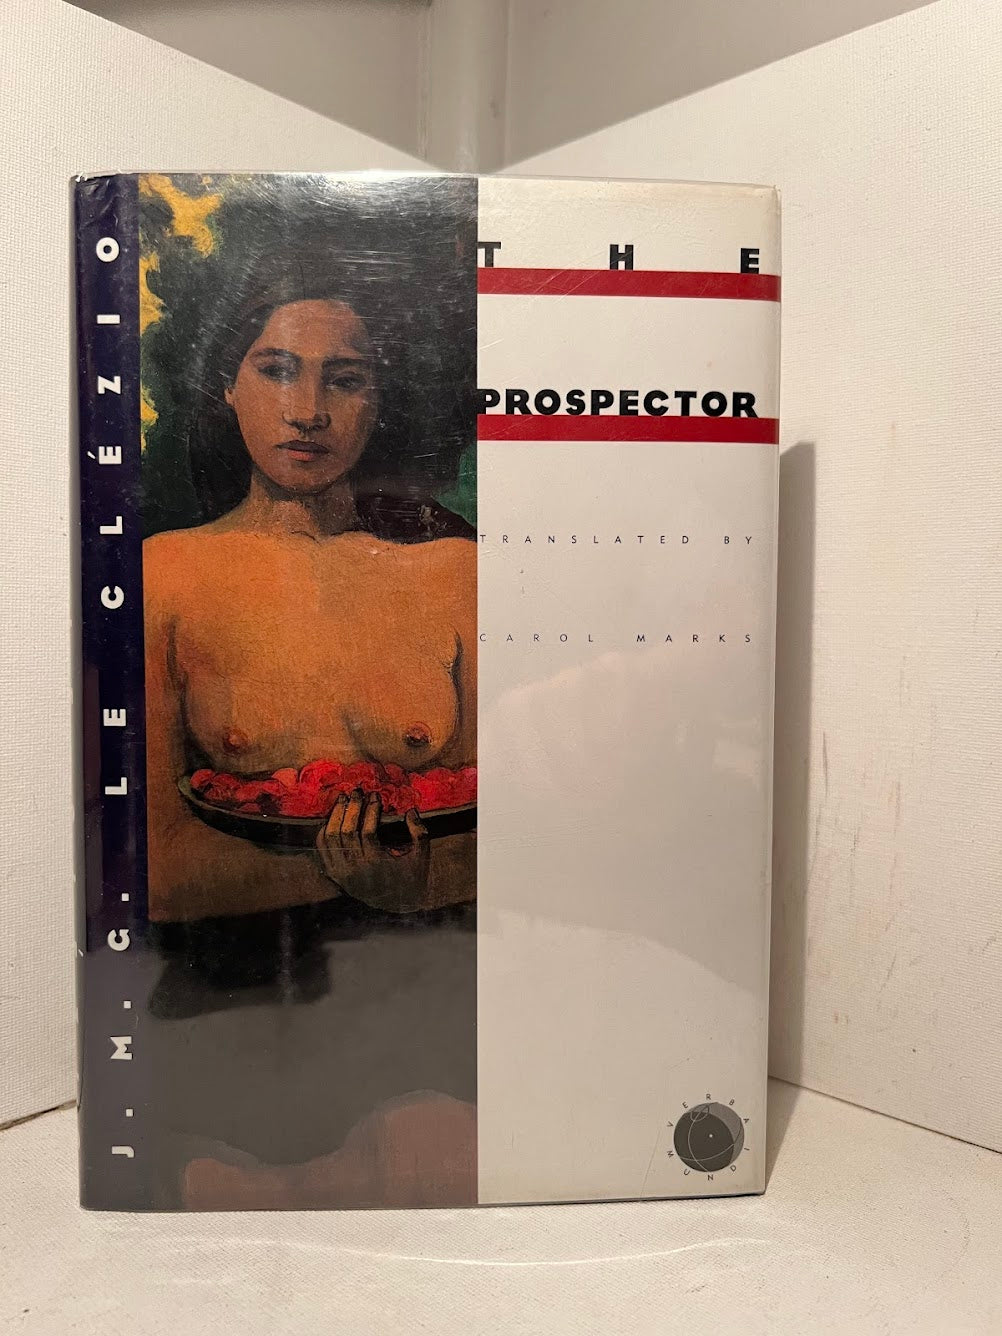 The Prospector by J.M.G. Le Clezio